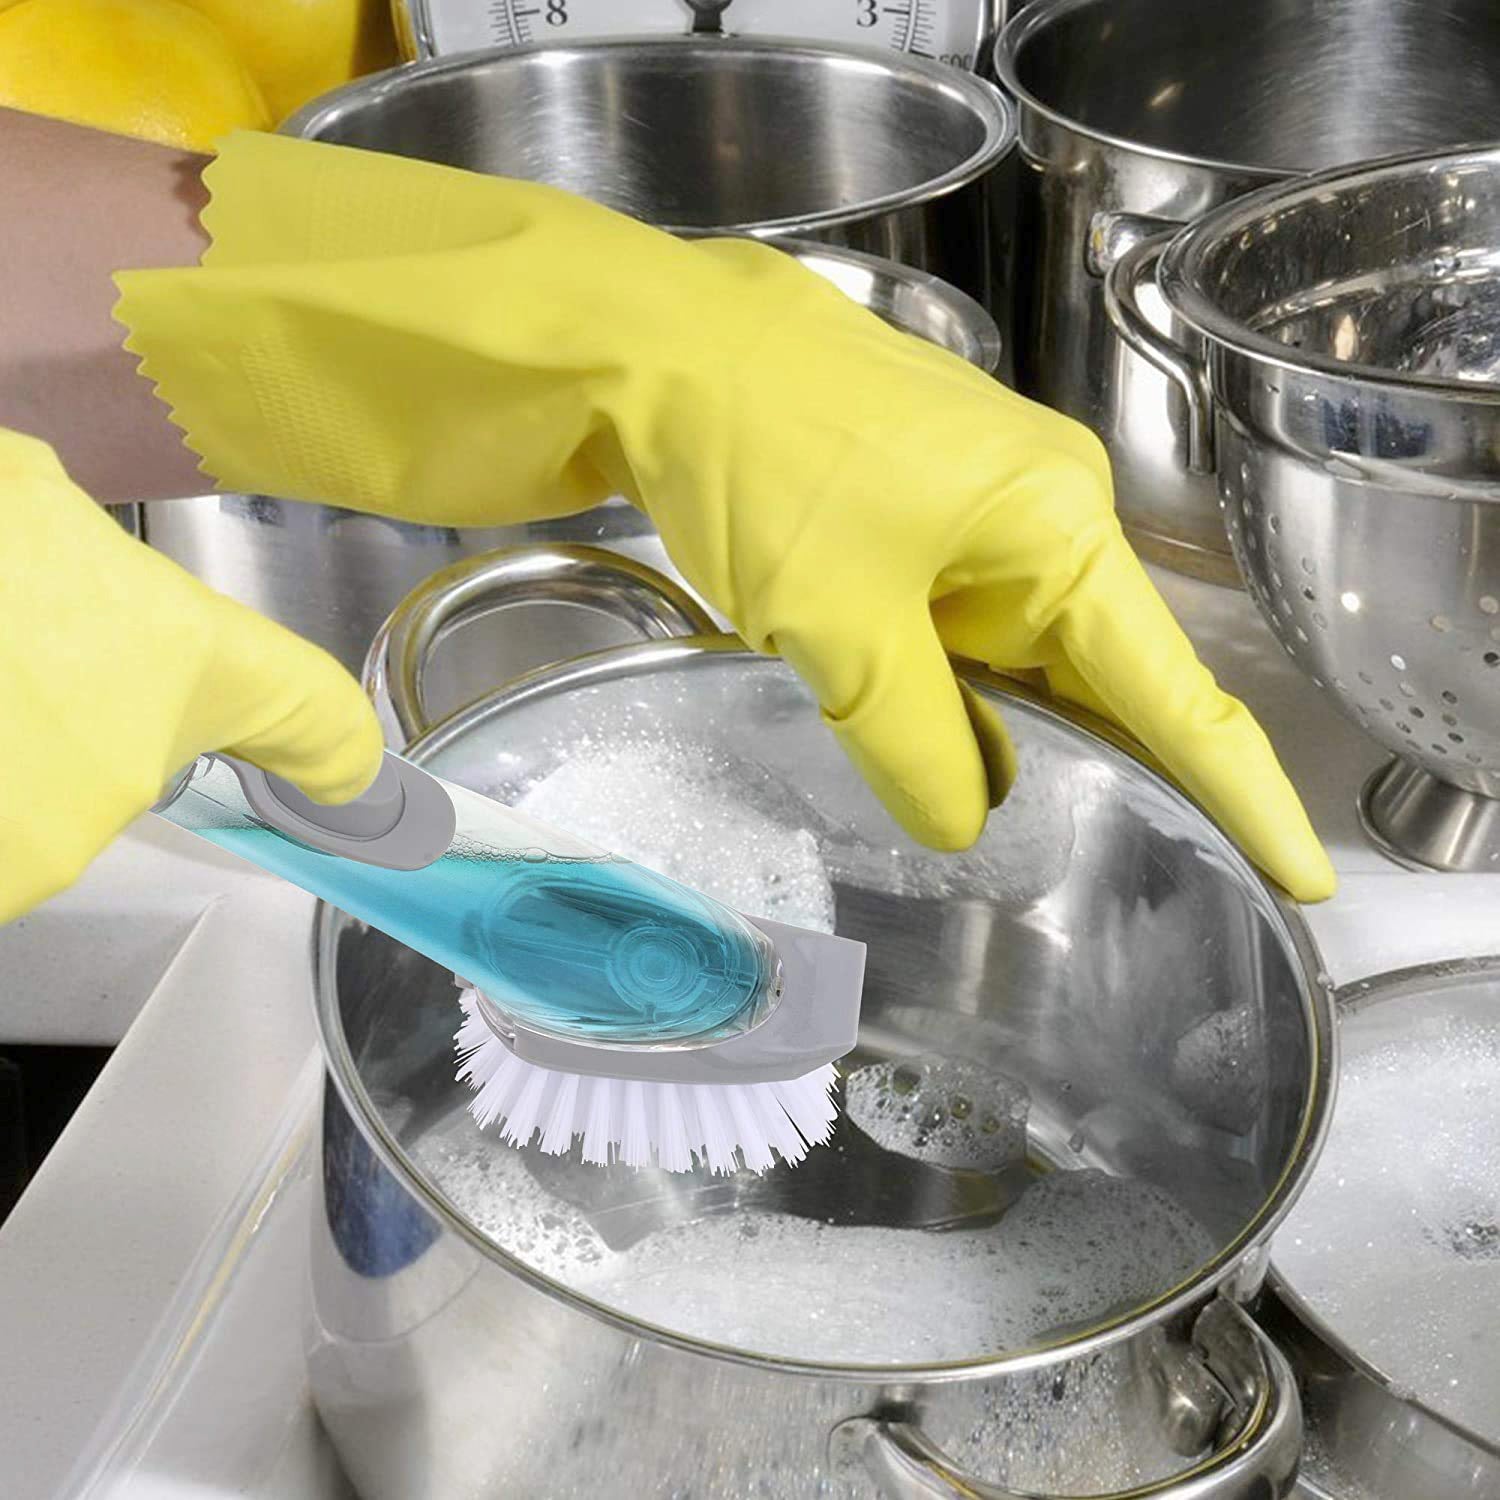 Automatic Liquid Dispenser Dish Clean Brush Scrubber